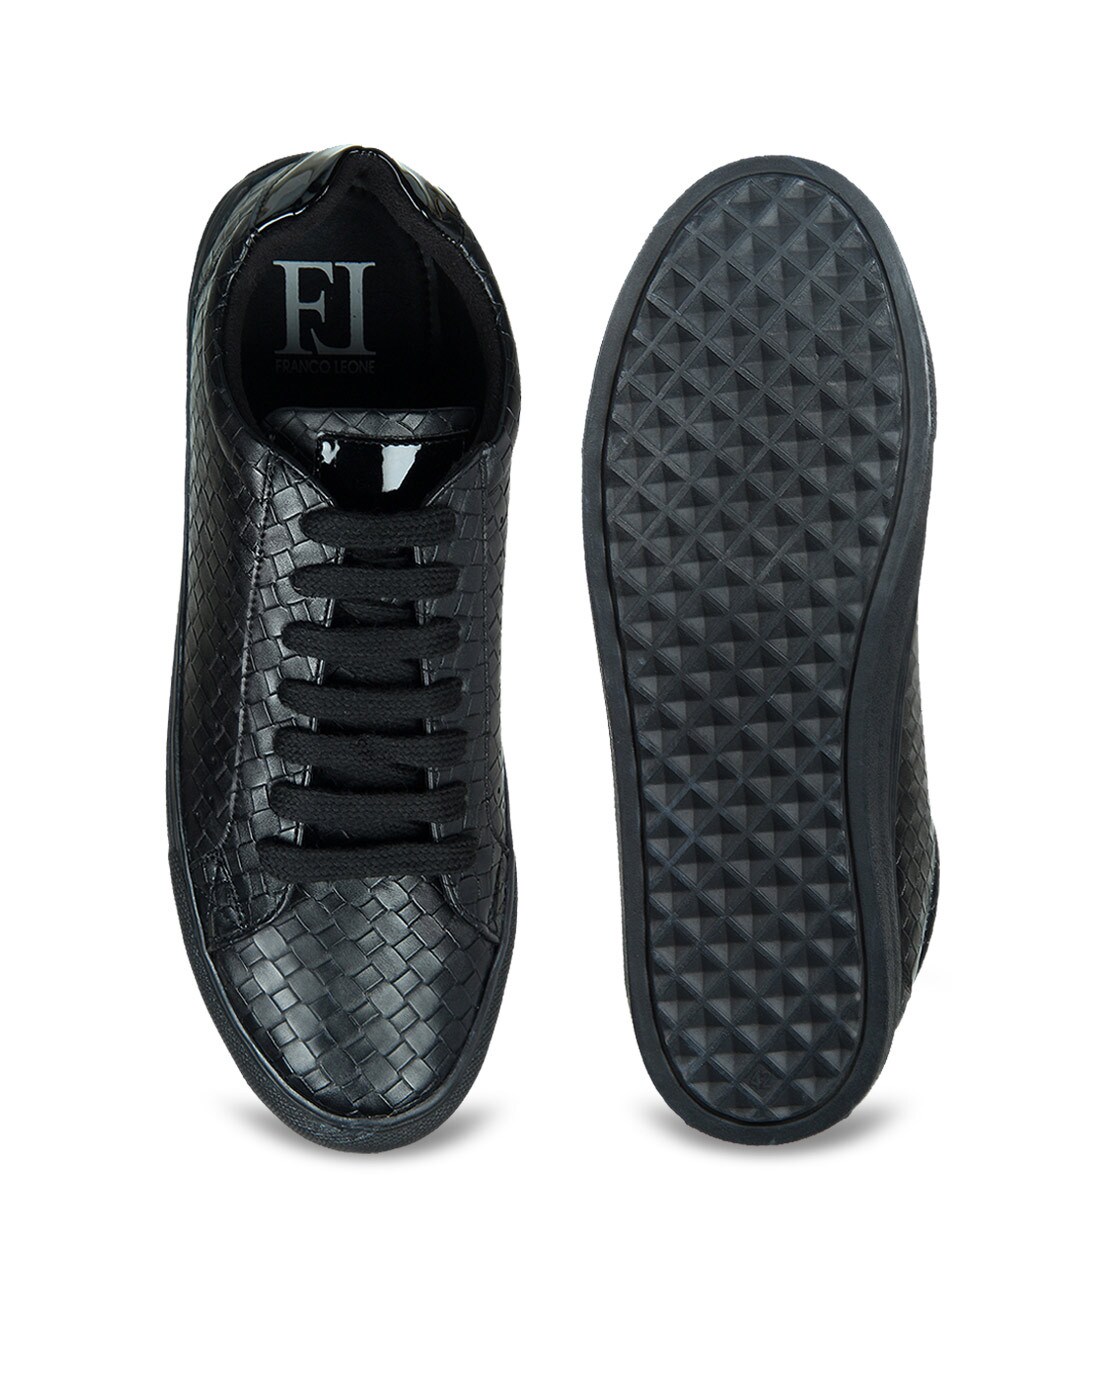 FRANCO LEONE Casuals For Men - Buy TAN Color FRANCO LEONE Casuals For Men  Online at Best Price - Shop Online for Footwears in India | Flipkart.com